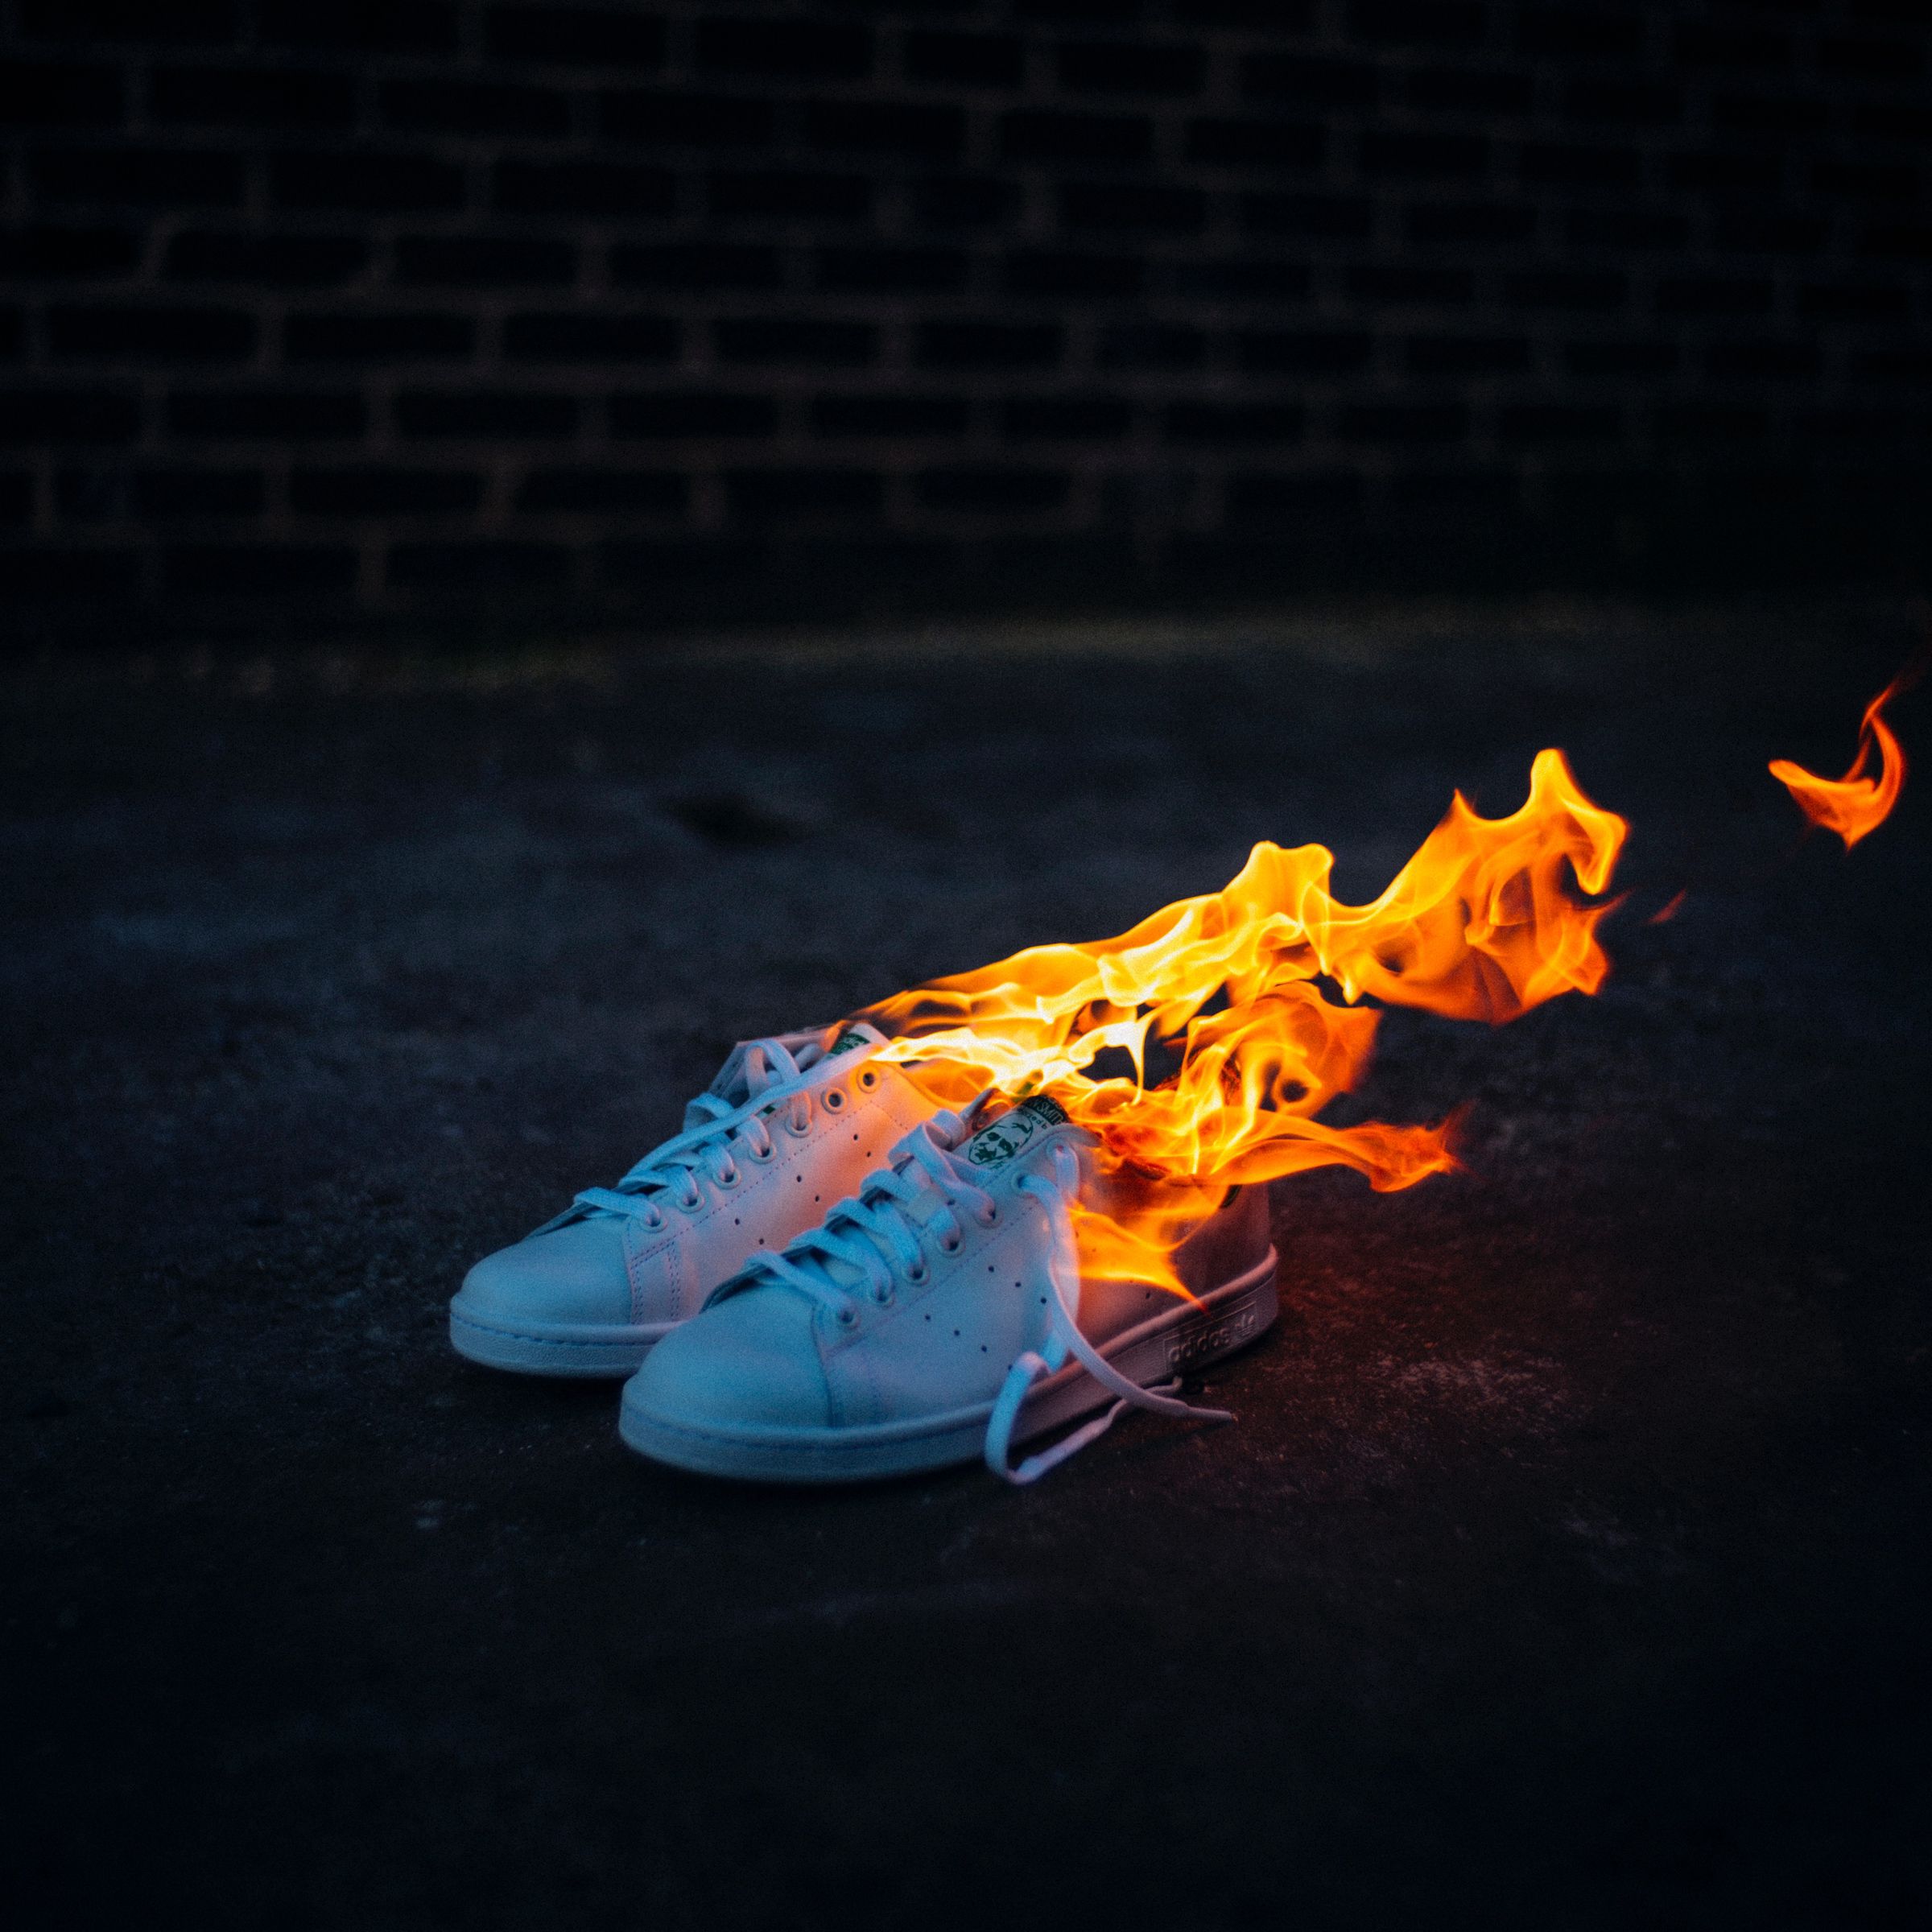 Desktop Backgrounds Sneakers flame, fire, miscellanea, miscellaneous